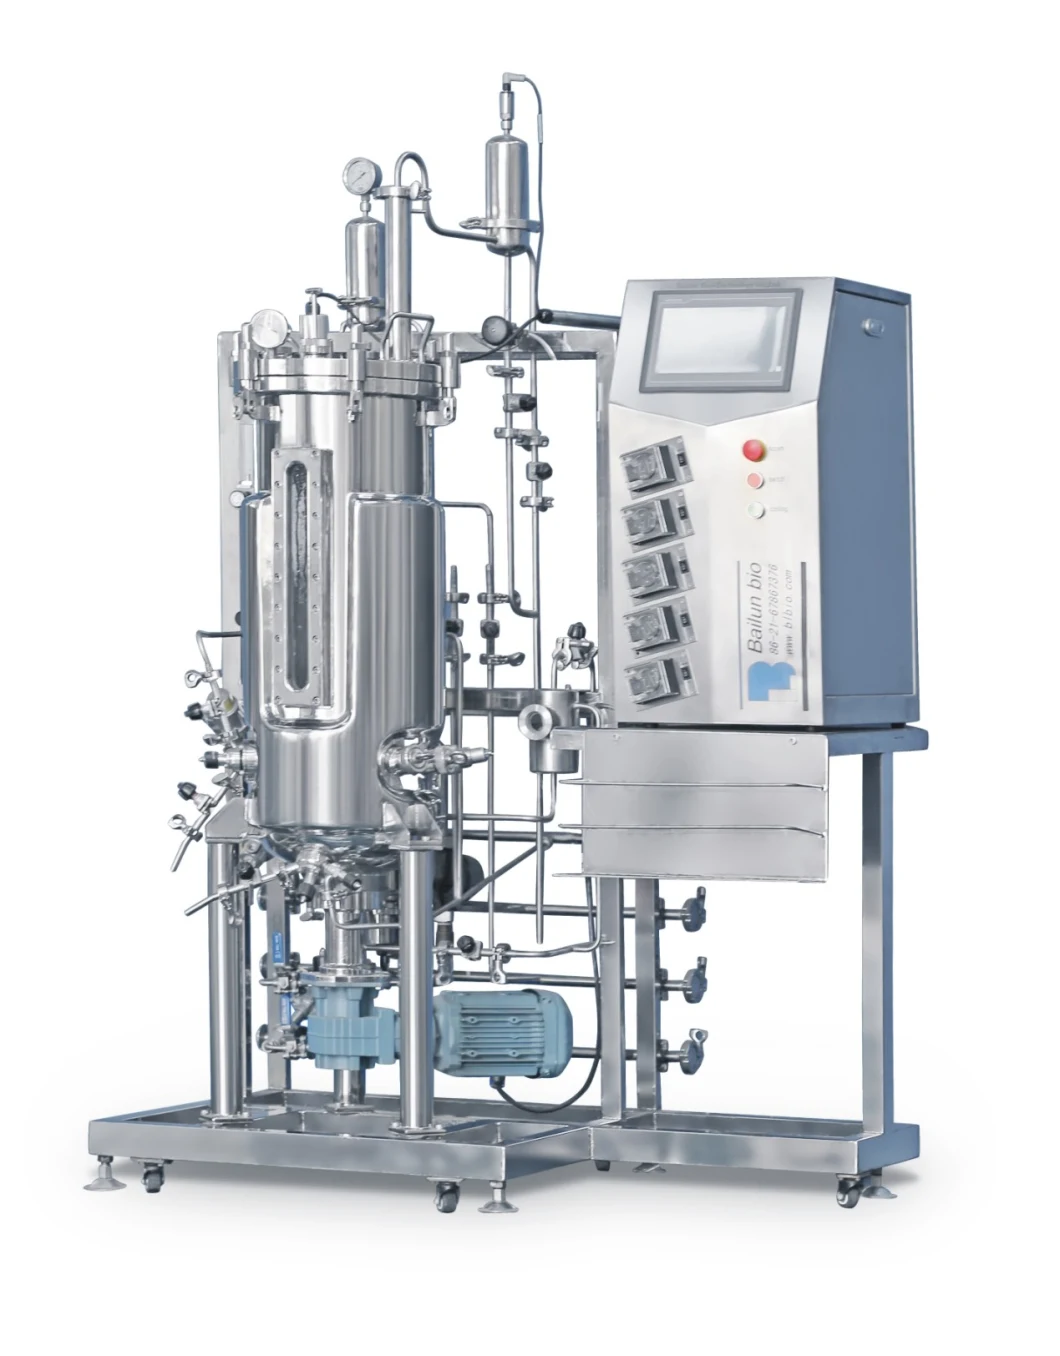 Dermizax Membrane Bioreactor for Hollow Fiber Bioreactor with Process Control in Glass Bioreactors